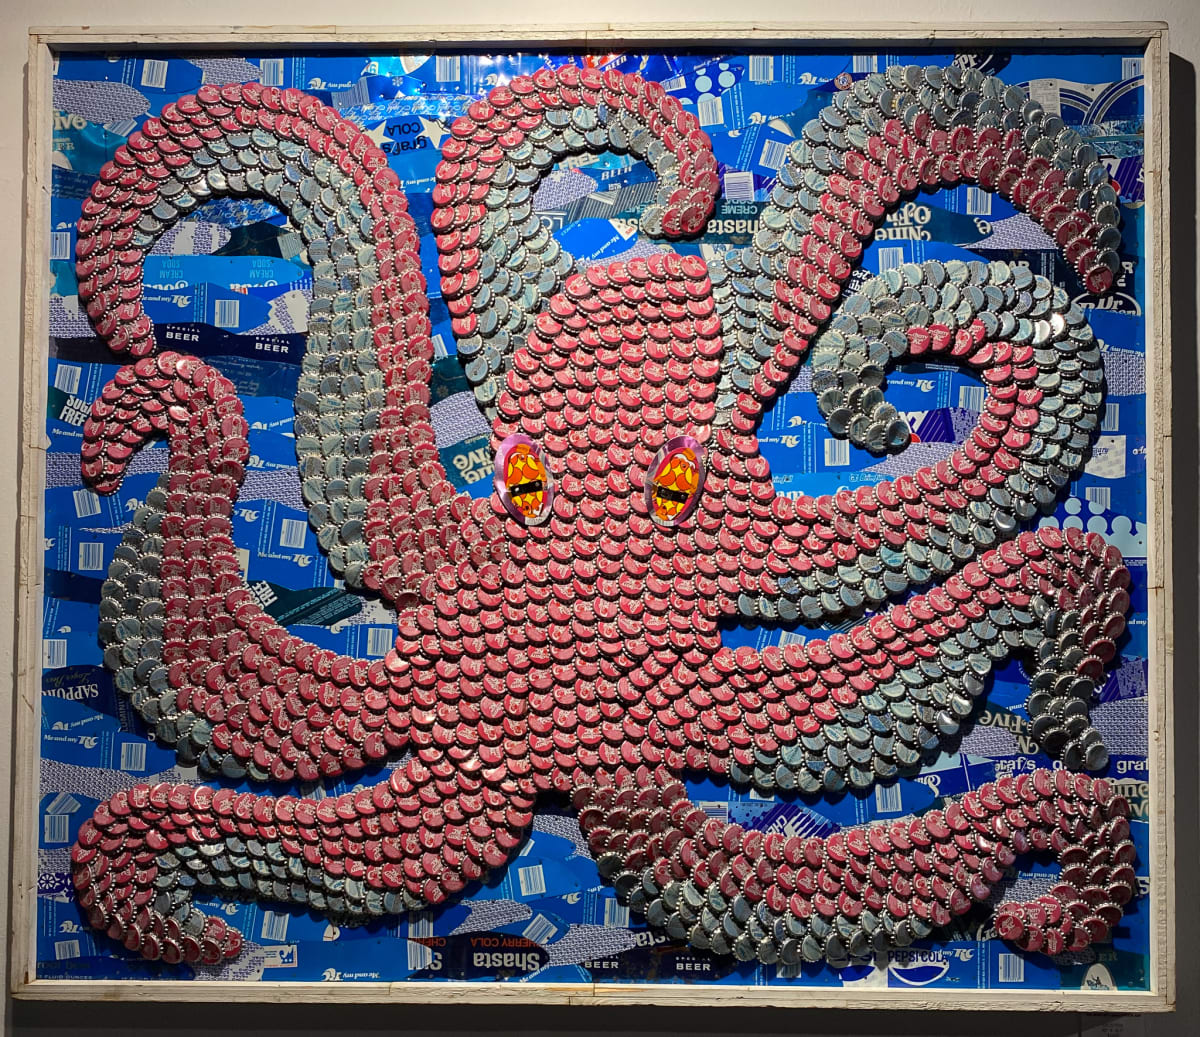 MOORE FAMILY FOLK ART - Octopus by Maxine Orange Studio Gallery  Image: MOORE FAMILY FOLK ART - Octopus